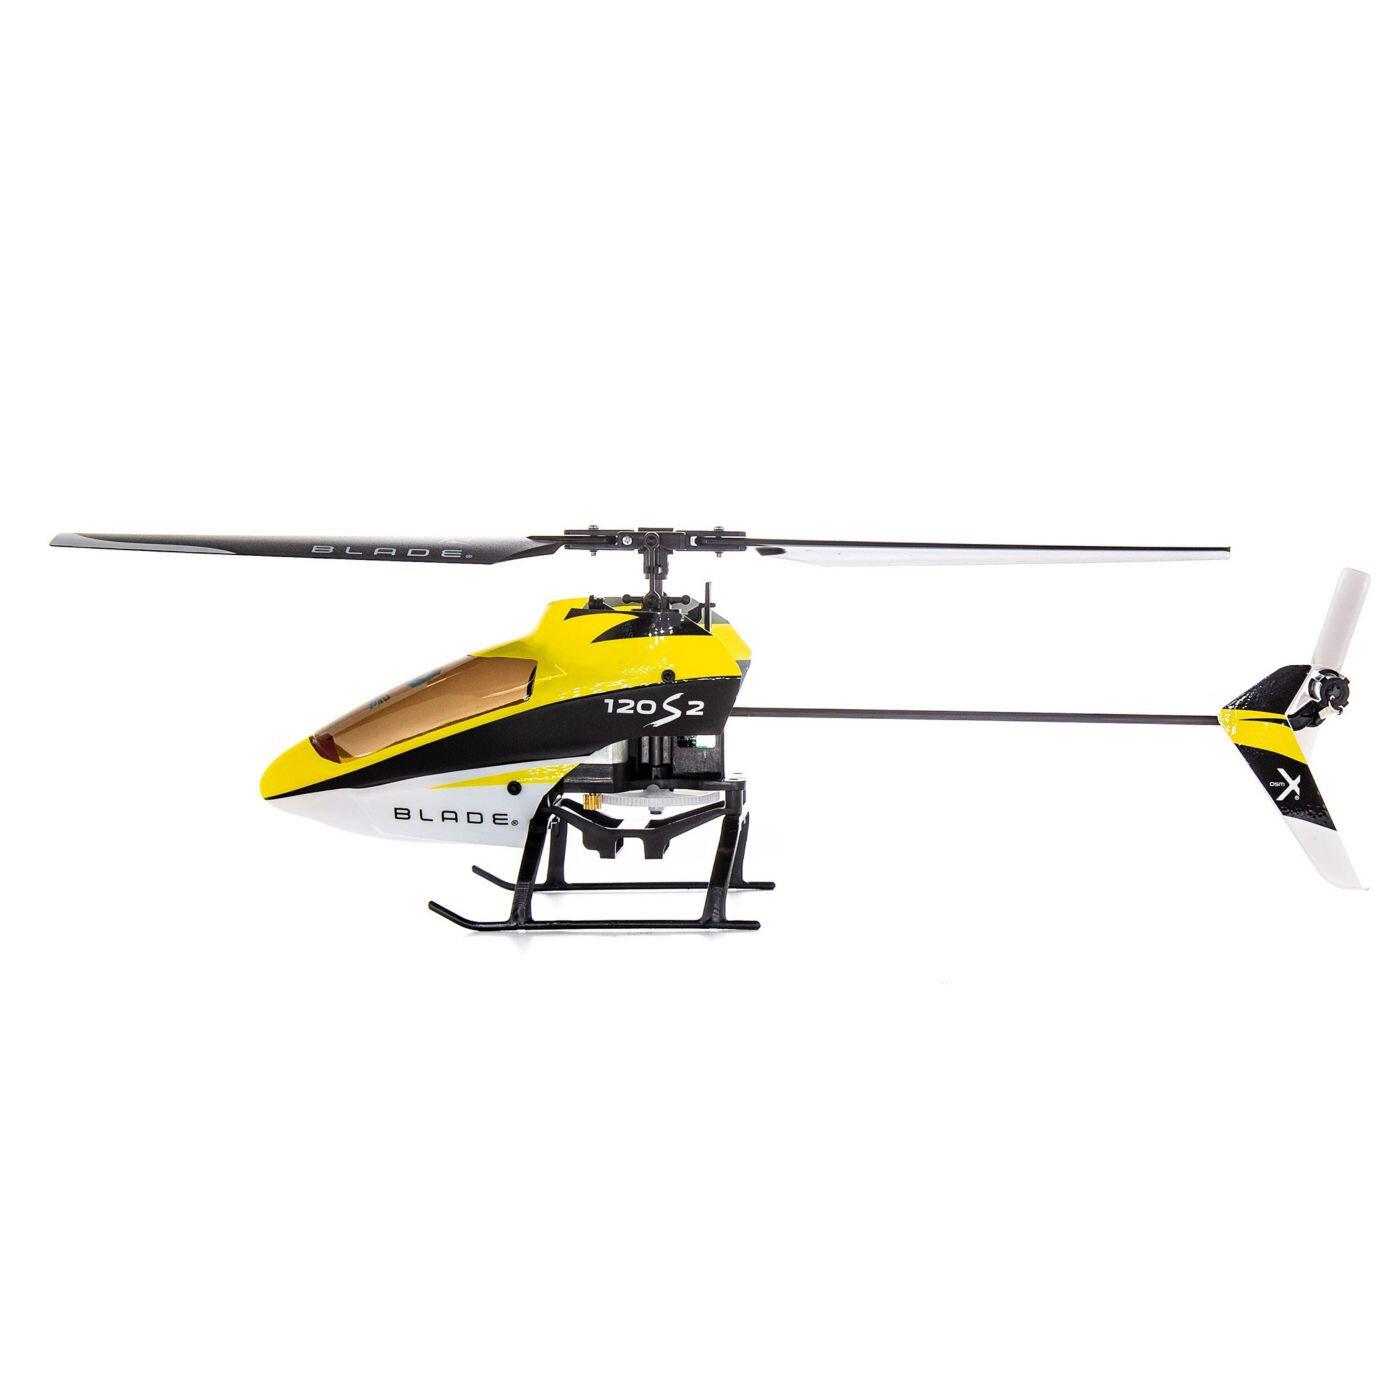 Rc Sensor Helicopter: Versatile Applications